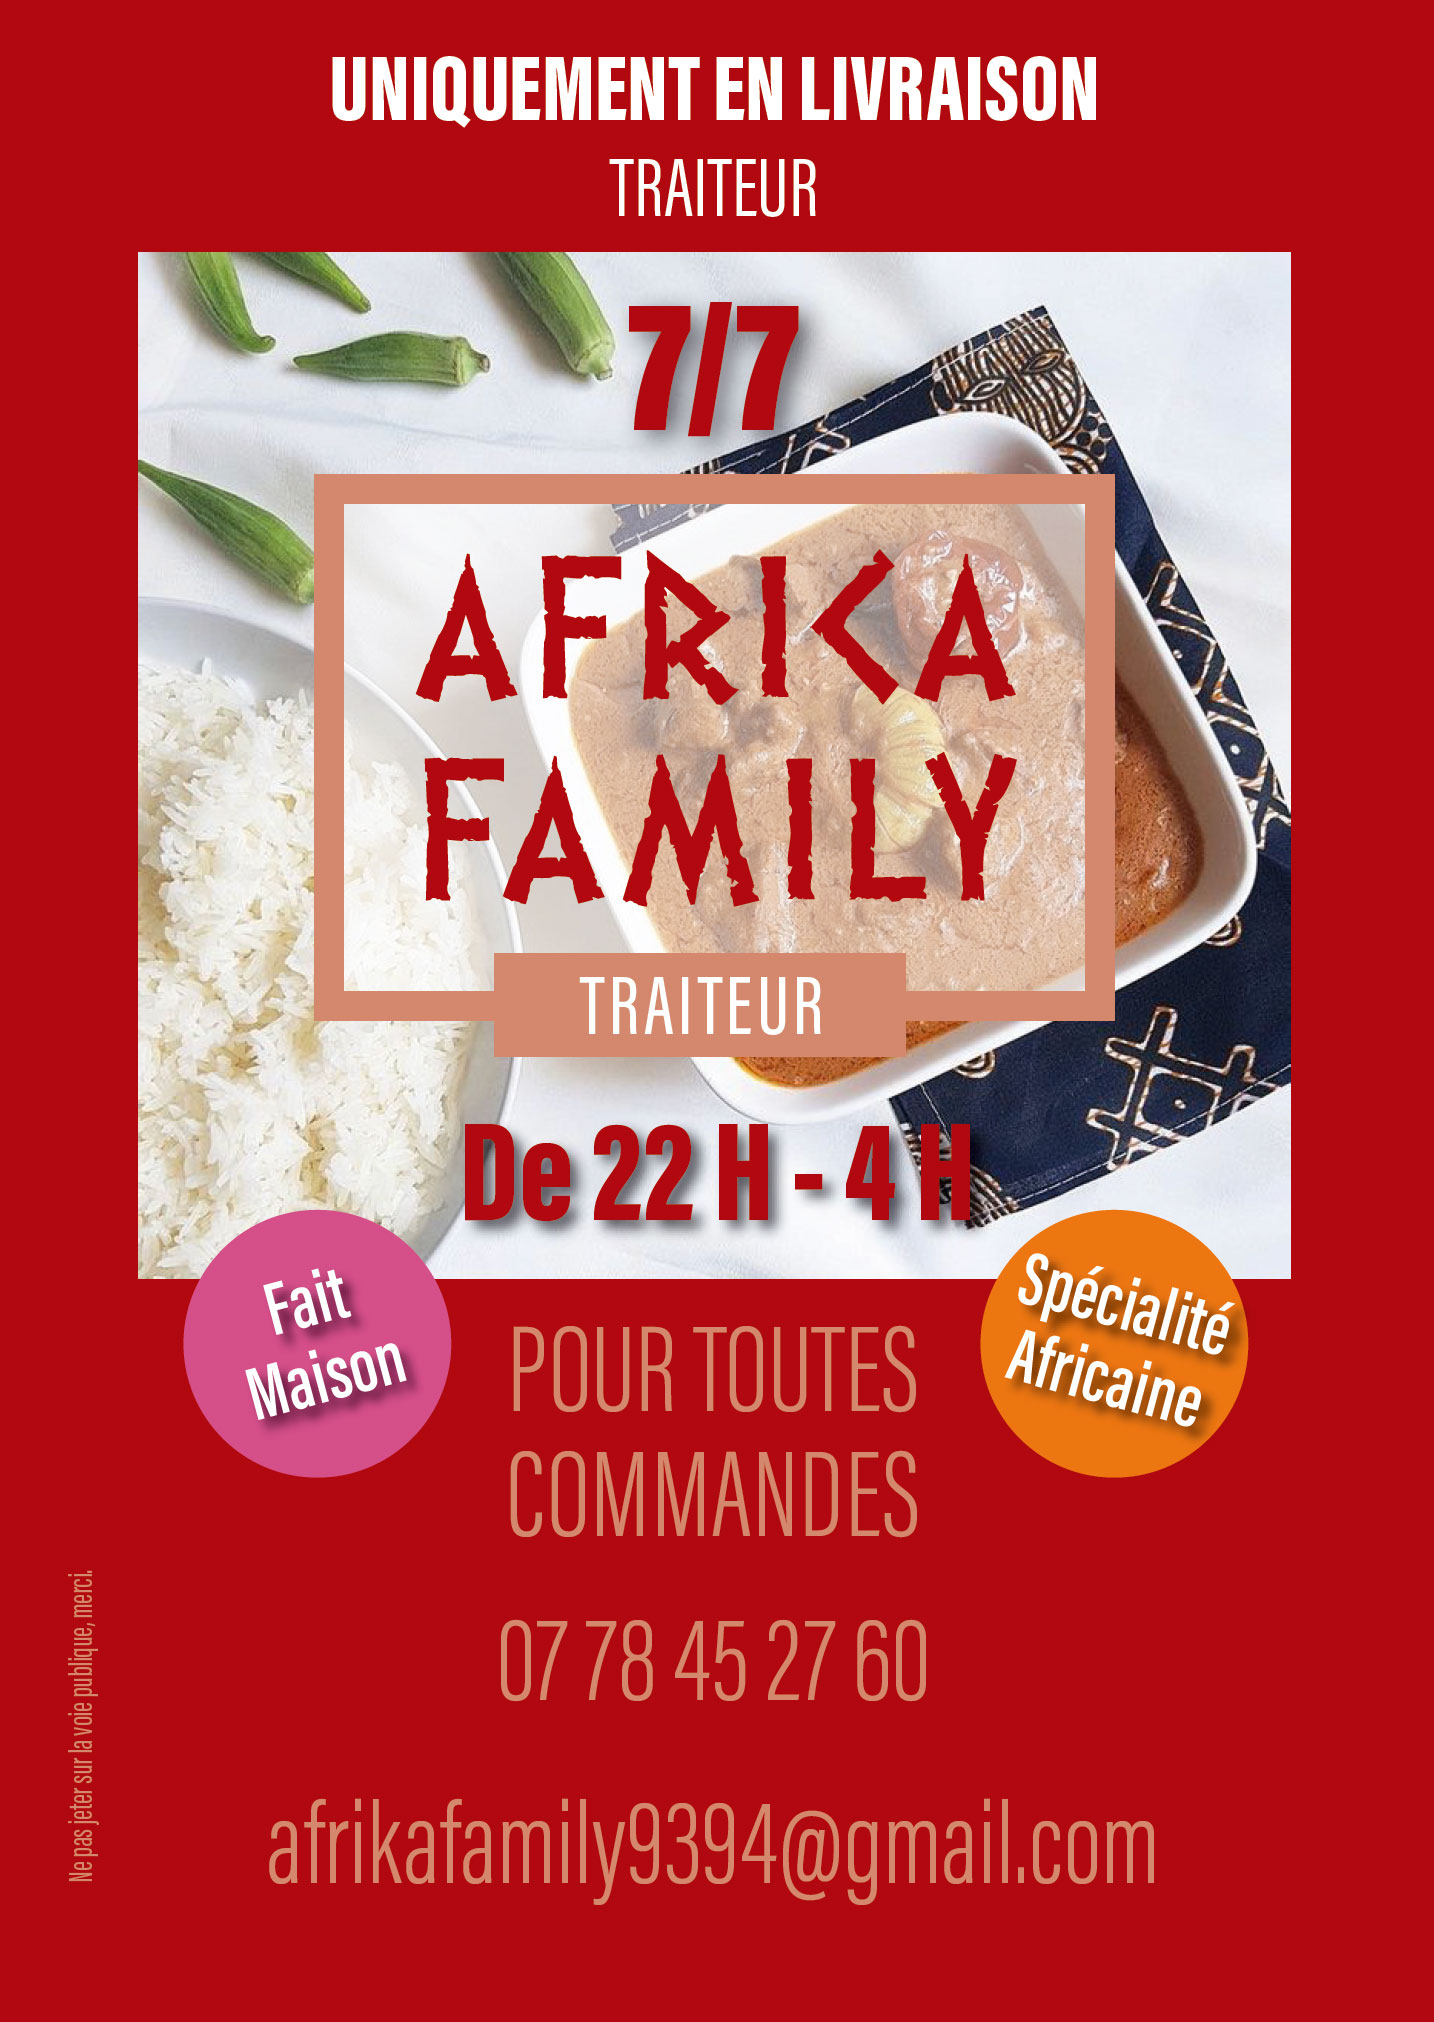 Africa Family, restauration, flyer, resto